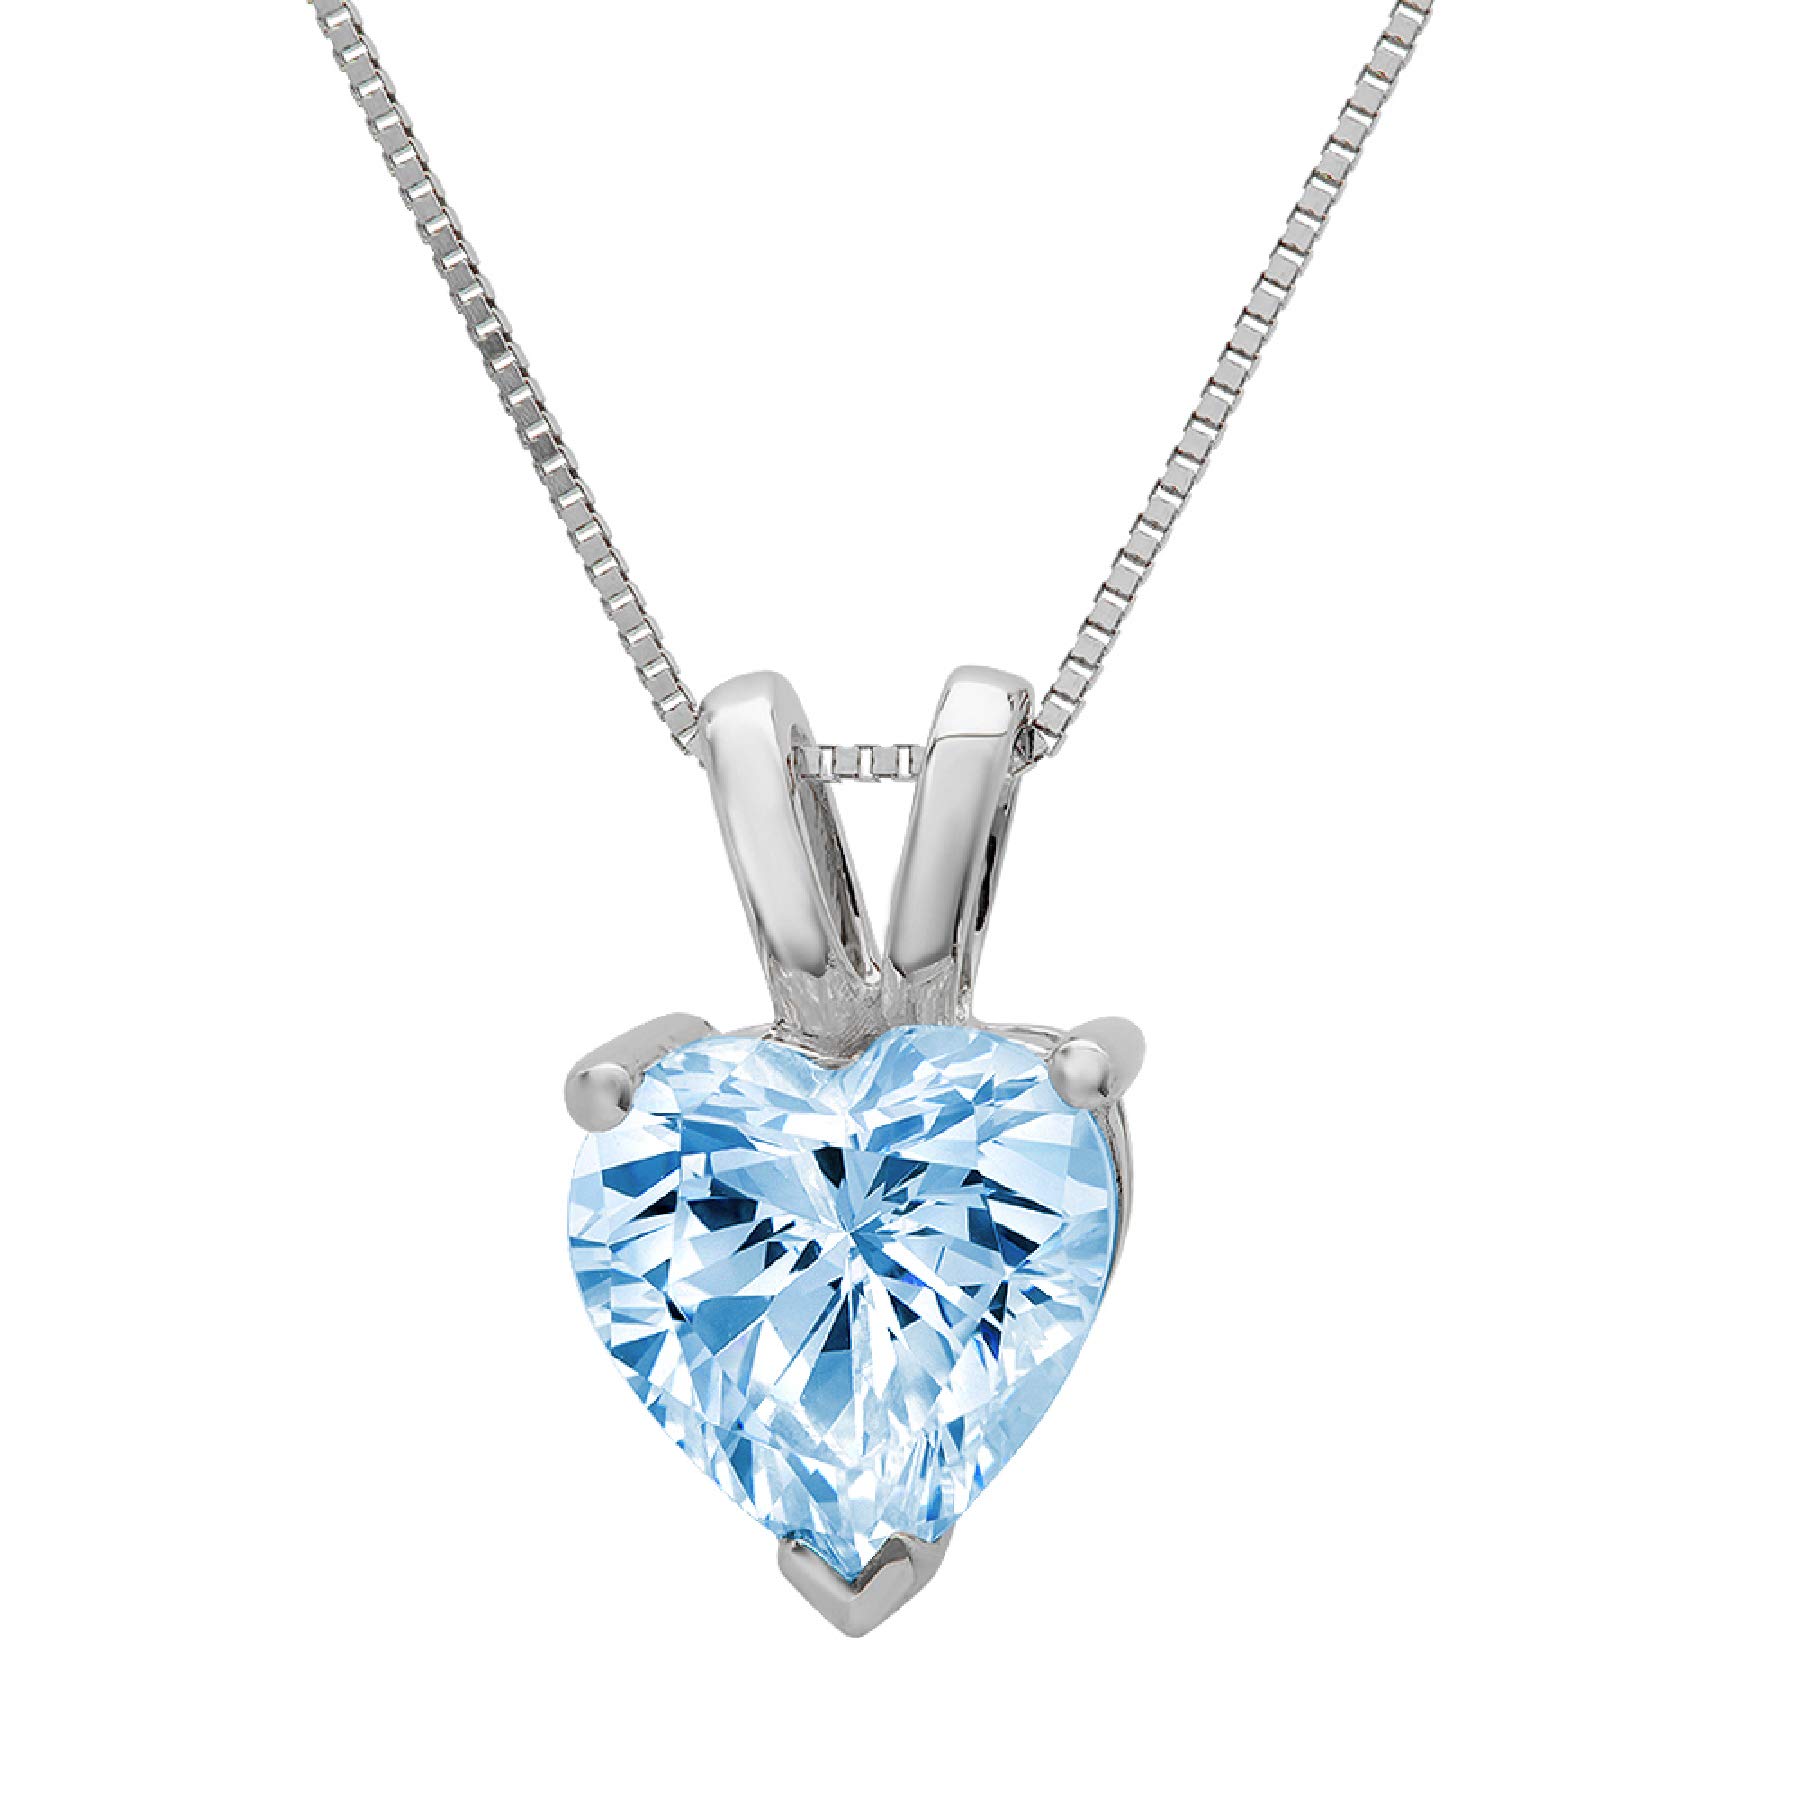 2.0 ct Brilliant Heart Cut Stunning Genuine Aquamarine Blue Simulated Diamond CZ Ideal VVS1 D Solitaire Pendant Necklace With 16